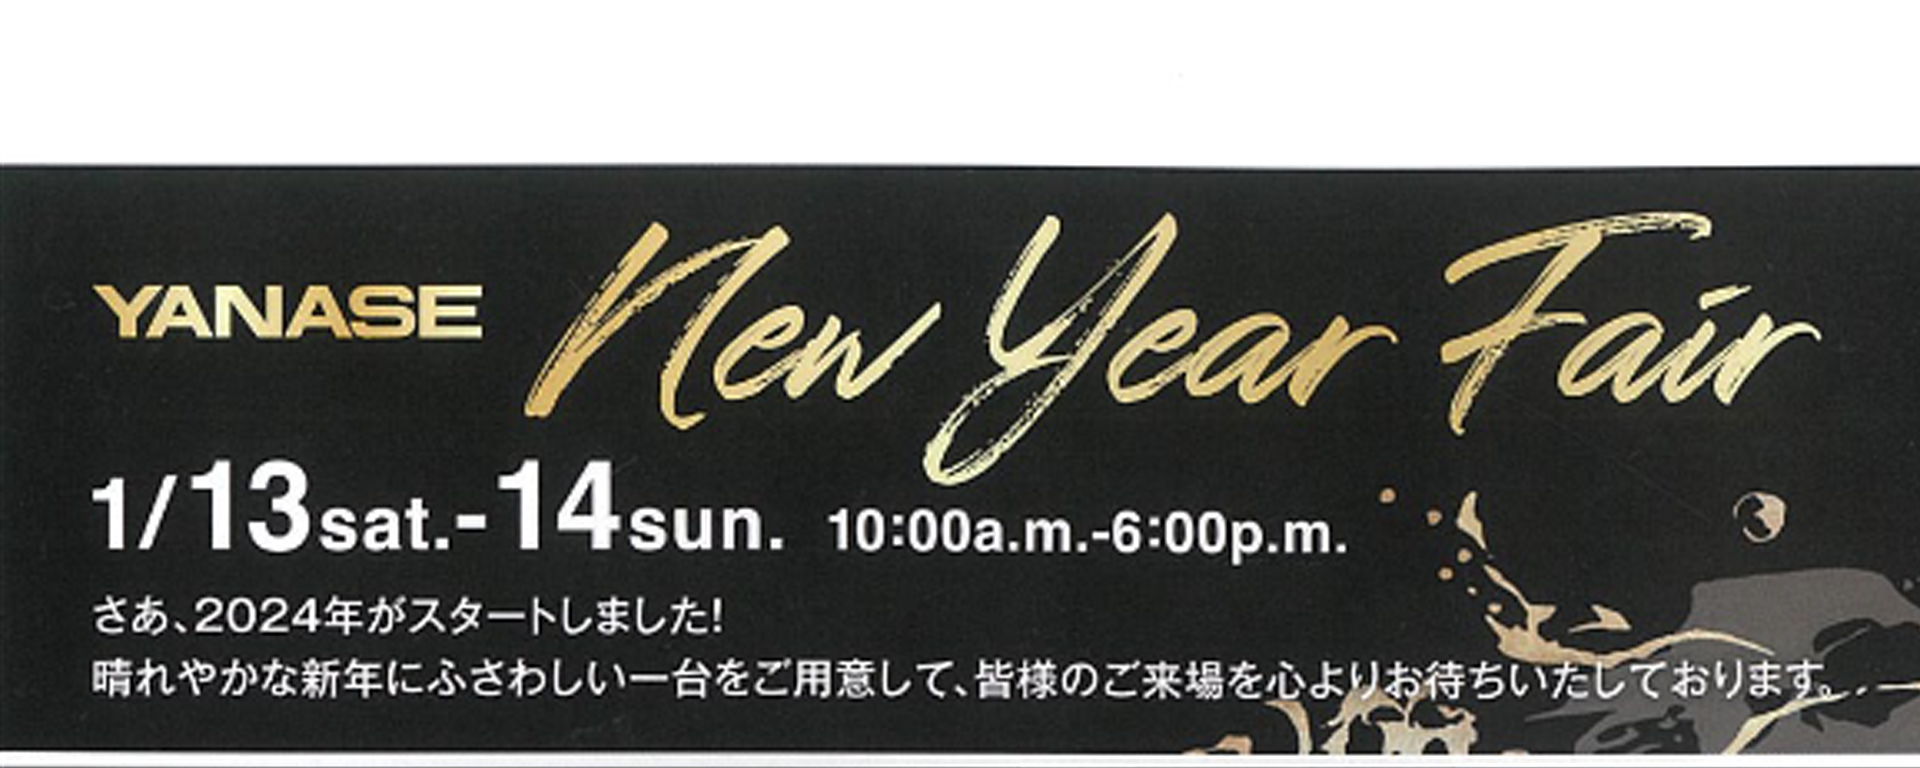 1/13-1/14 YANASE New year Fair開催！！